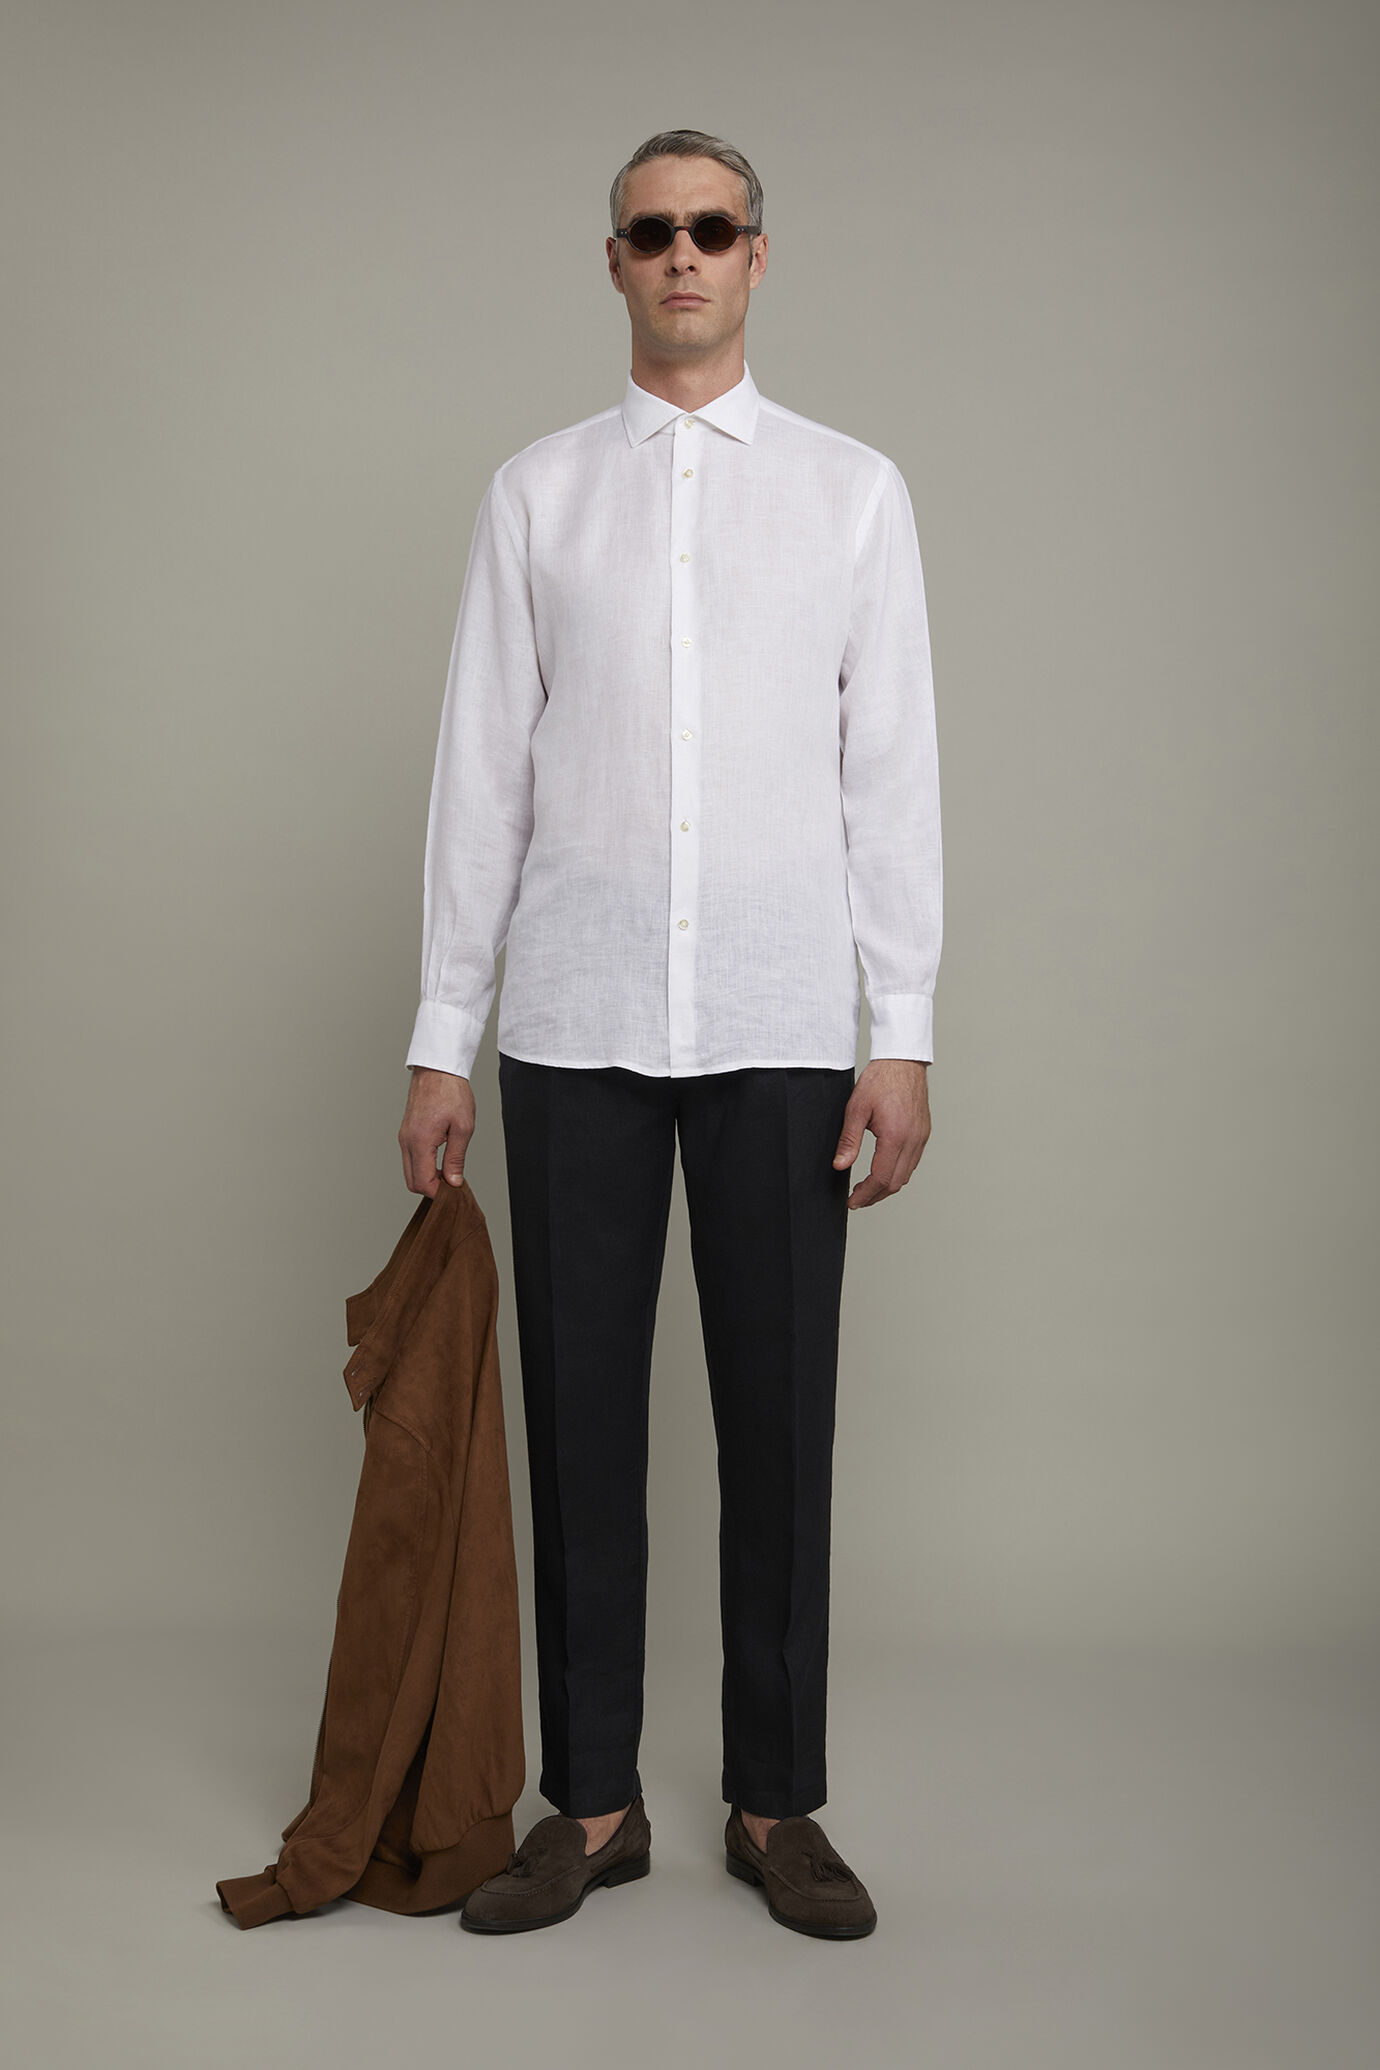 Men’s casual shirt classic collar 100% linen comfort fit